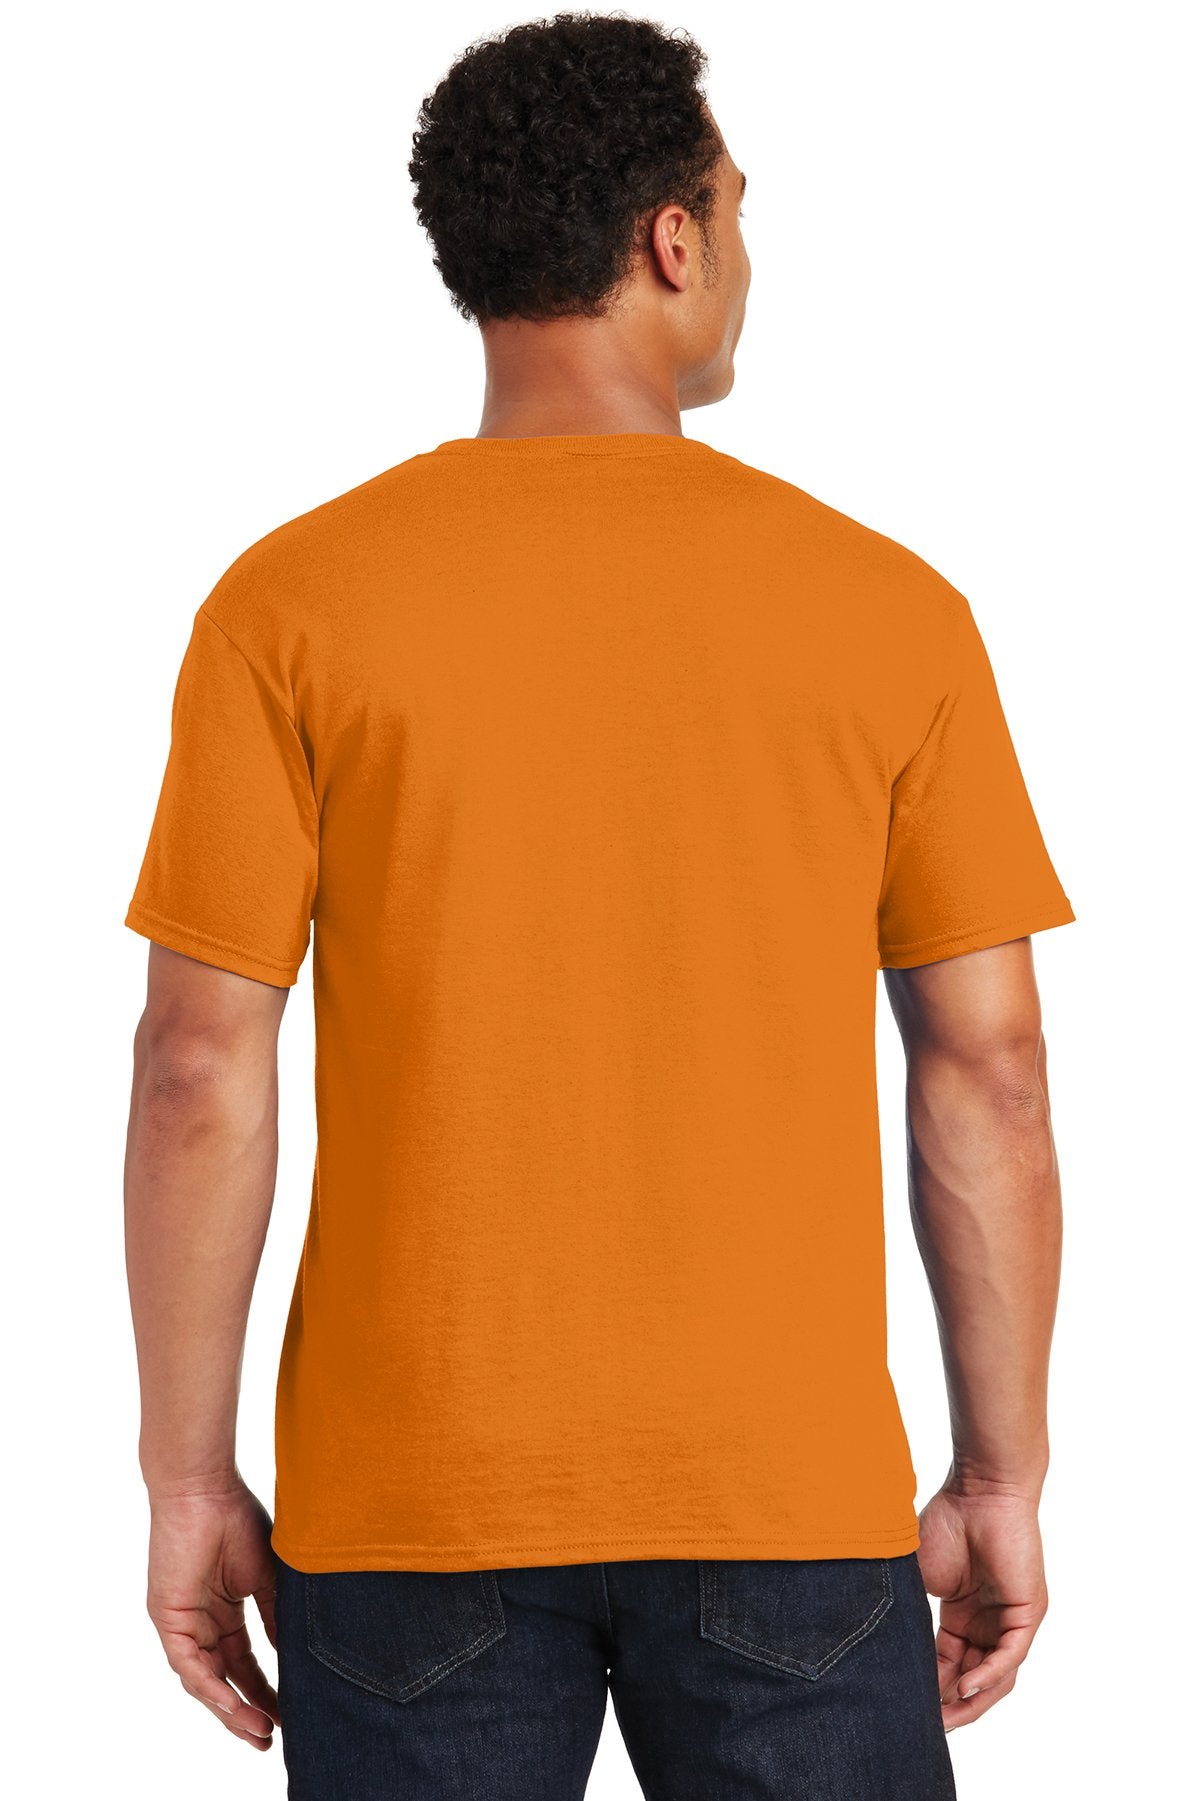 Jerzees Dri-Power Active 50/50 Cotton/Poly T-Shirt 29M Tennessee Orange